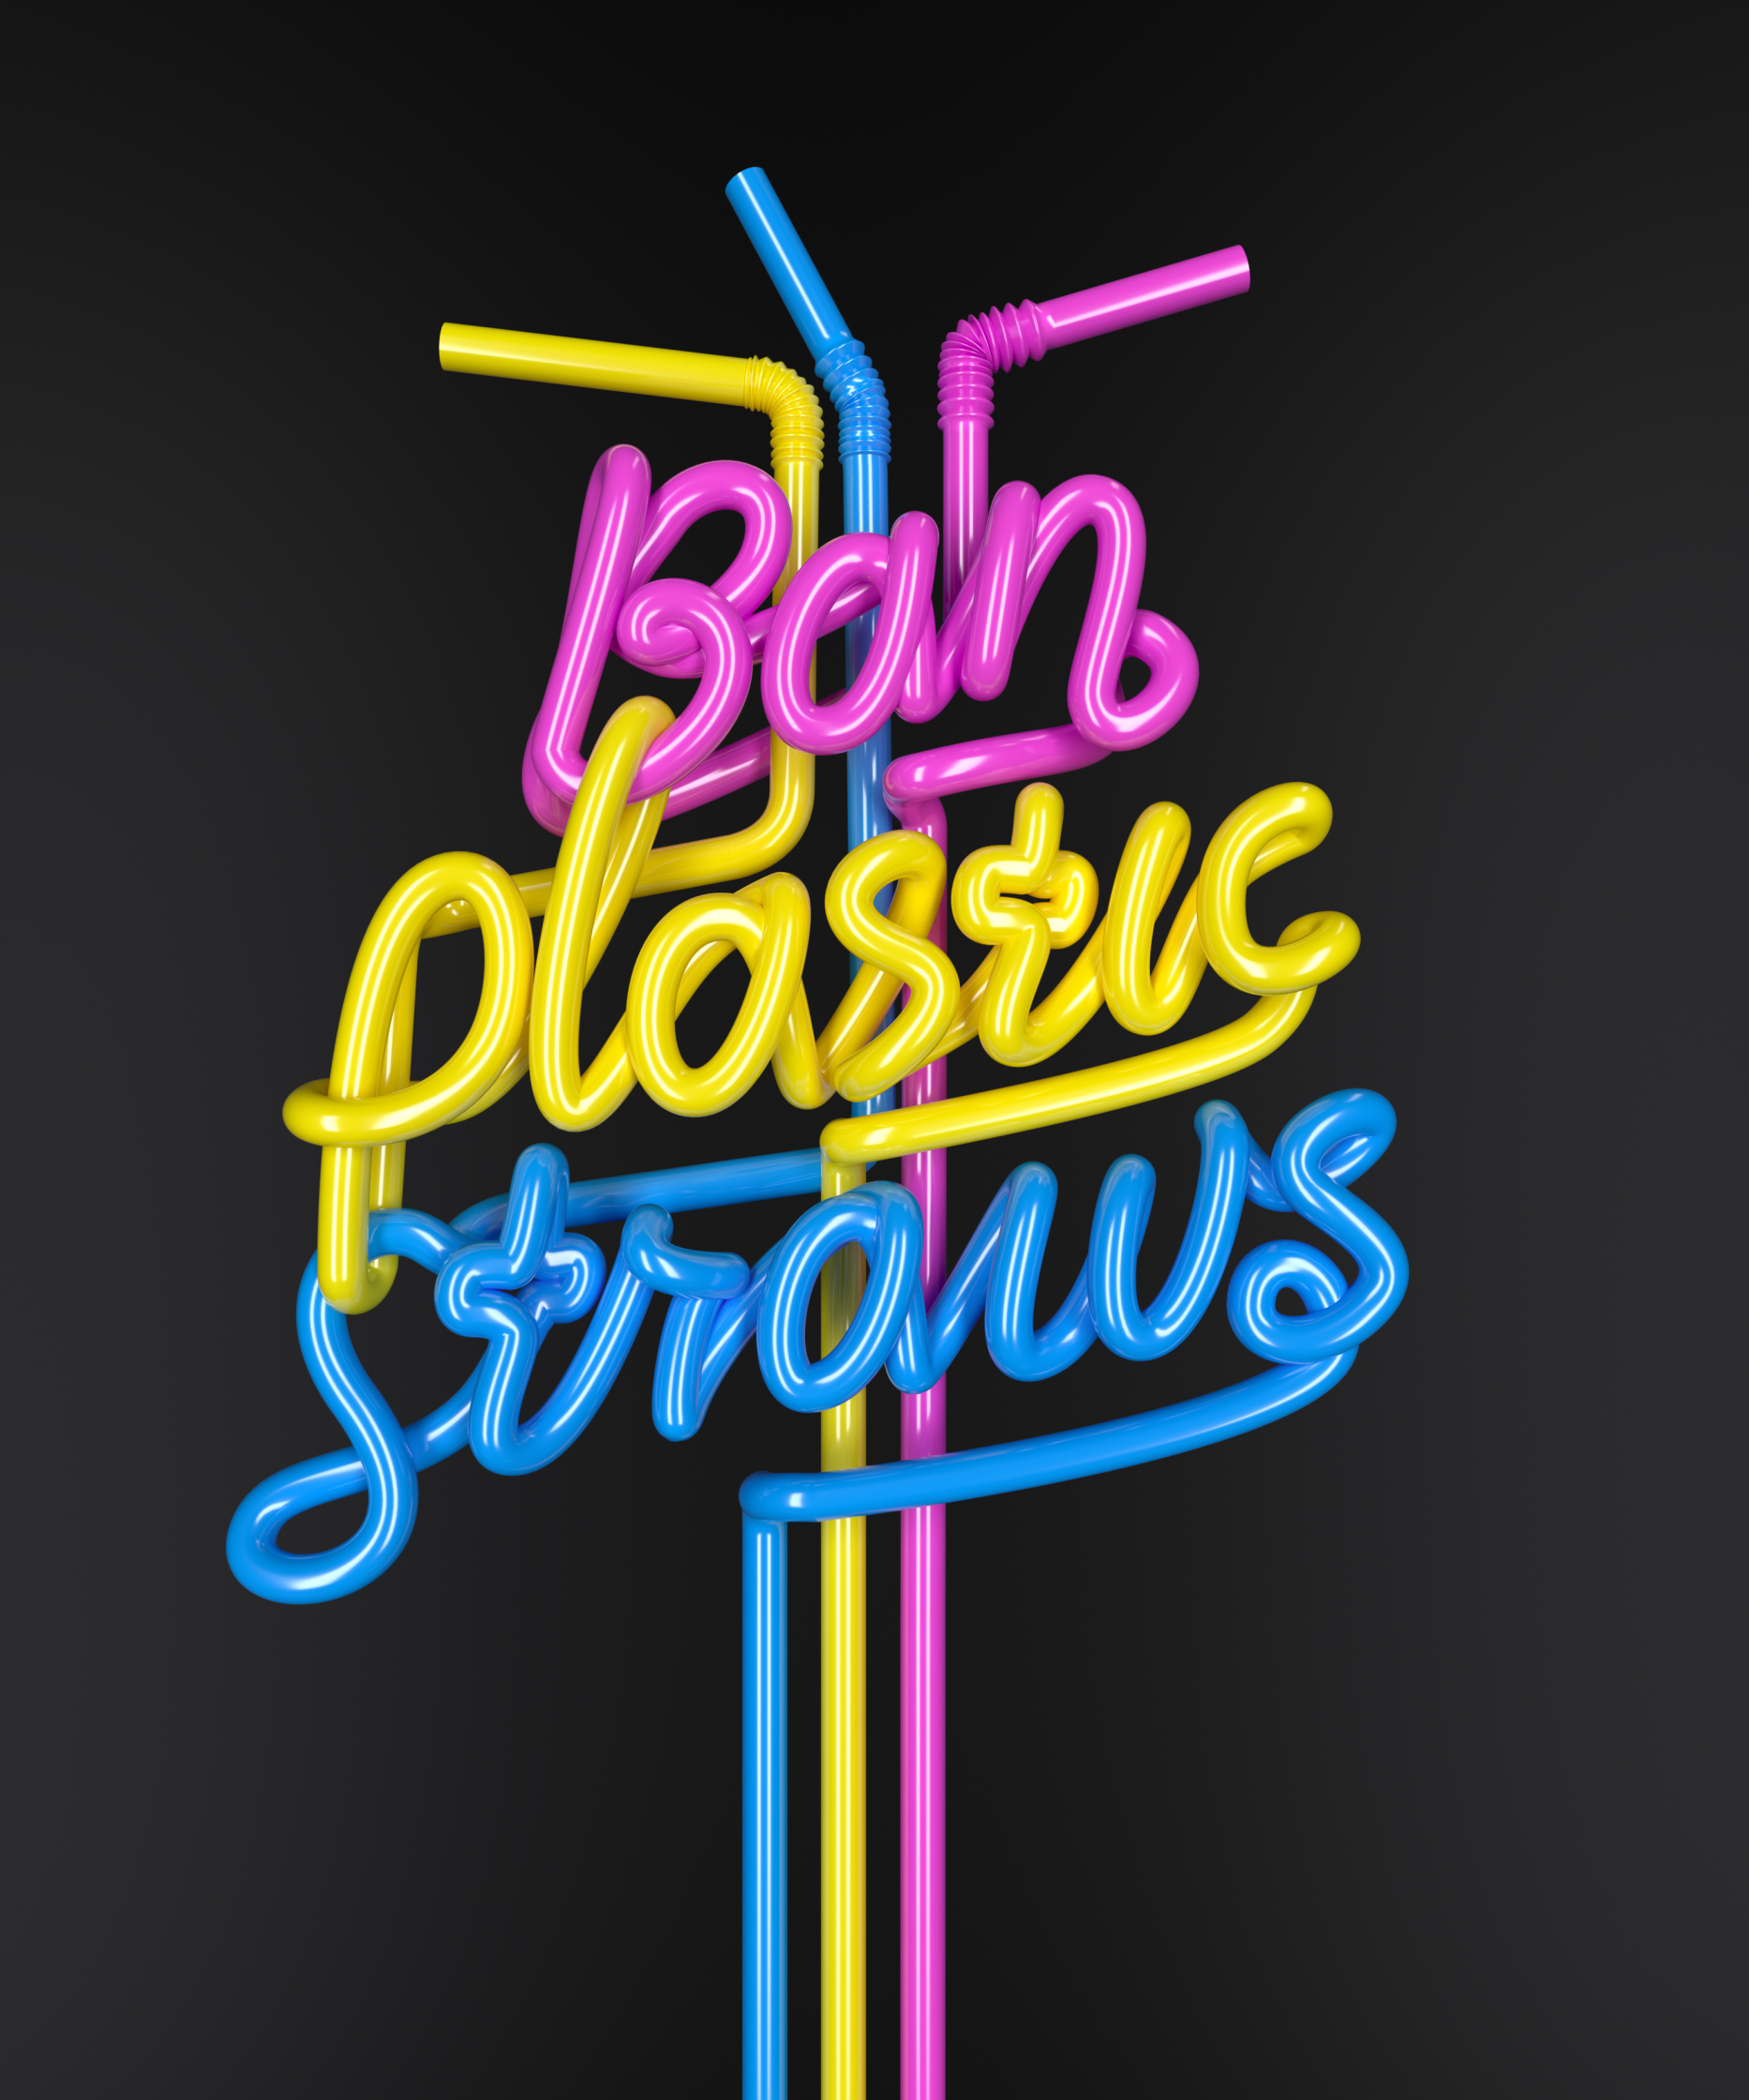 5.Ban plastic straws.jpg